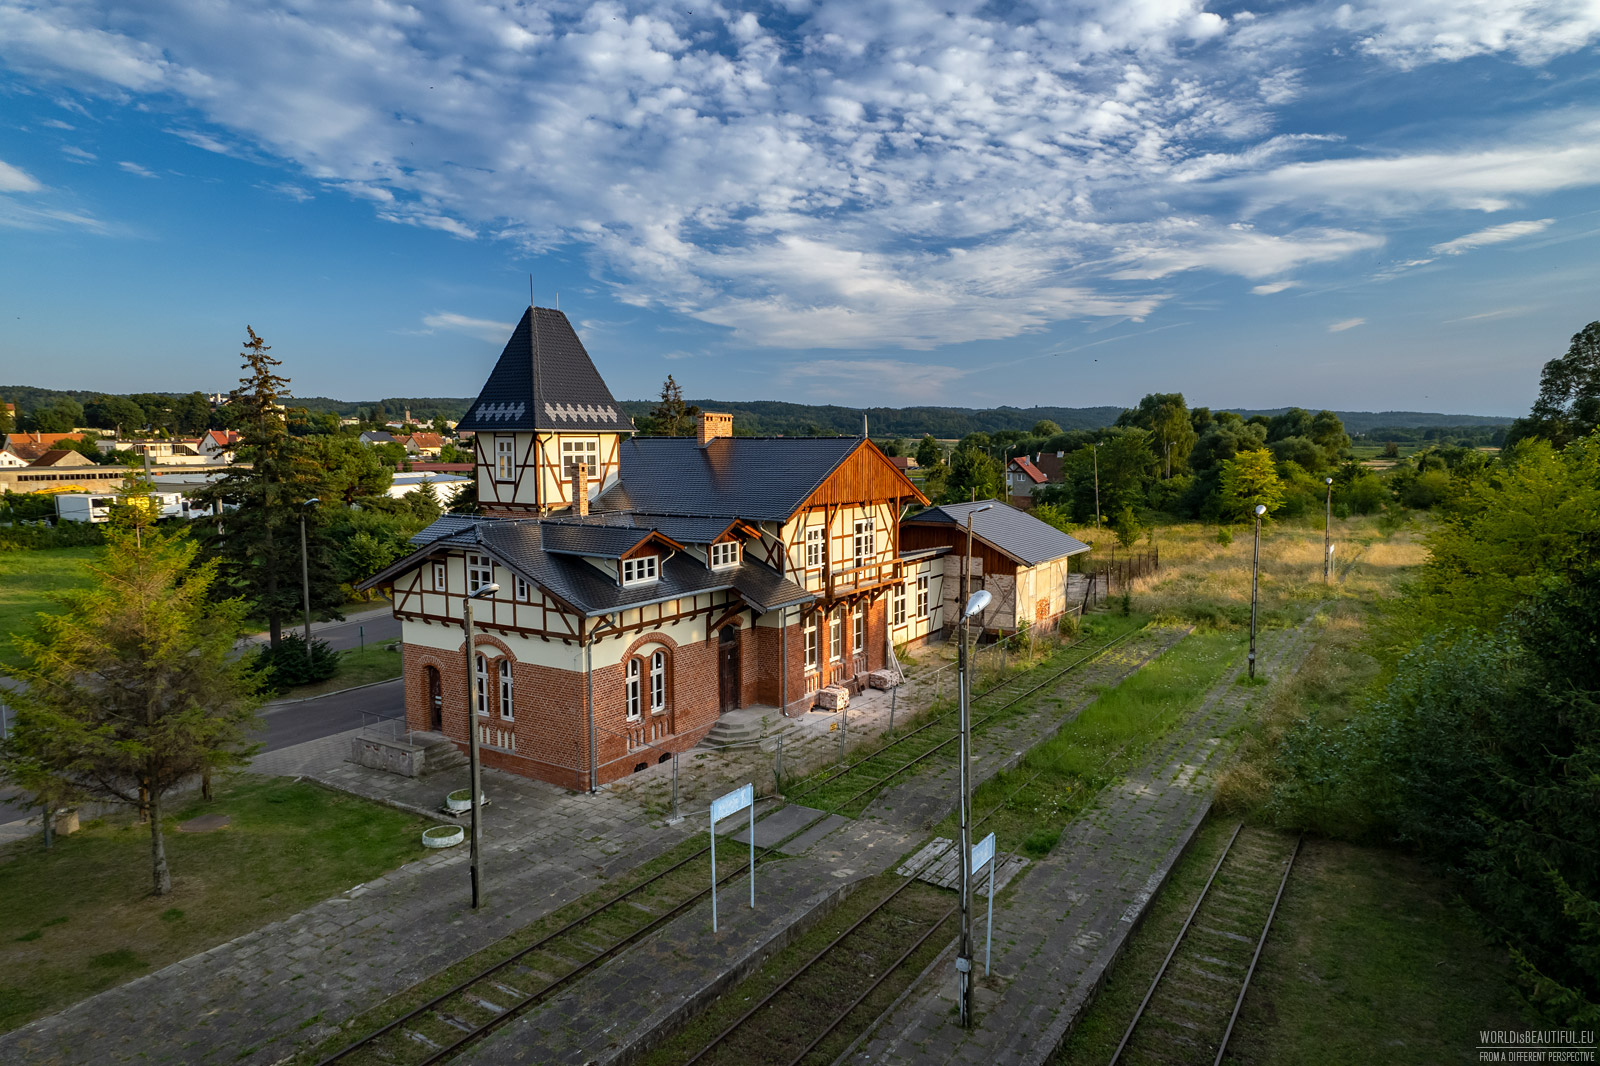 Railway Station in Tolkmicko